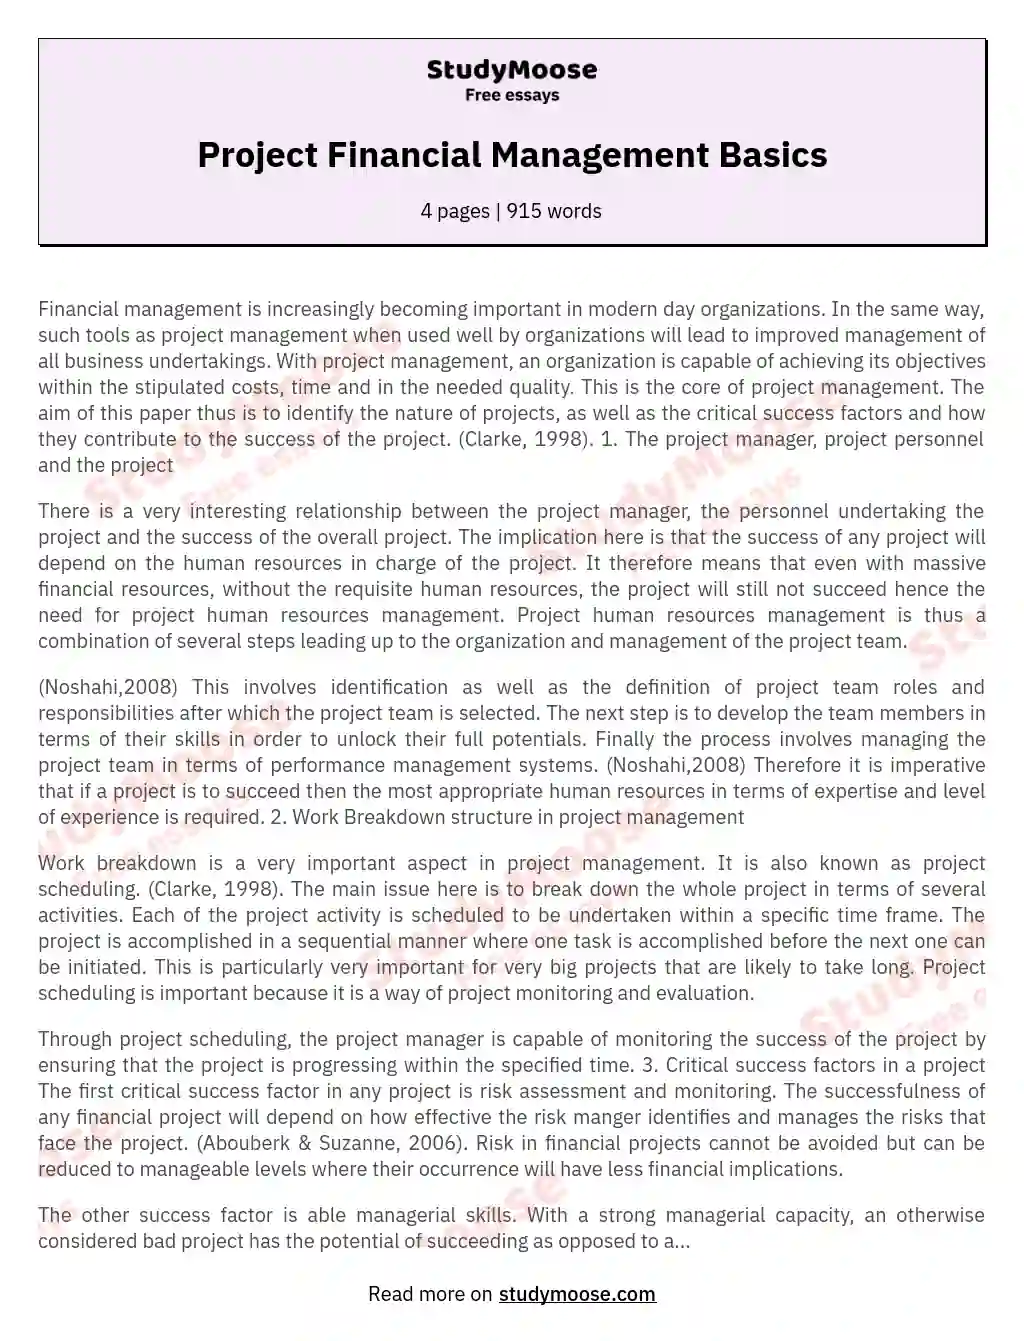 Project Financial Management Basics essay